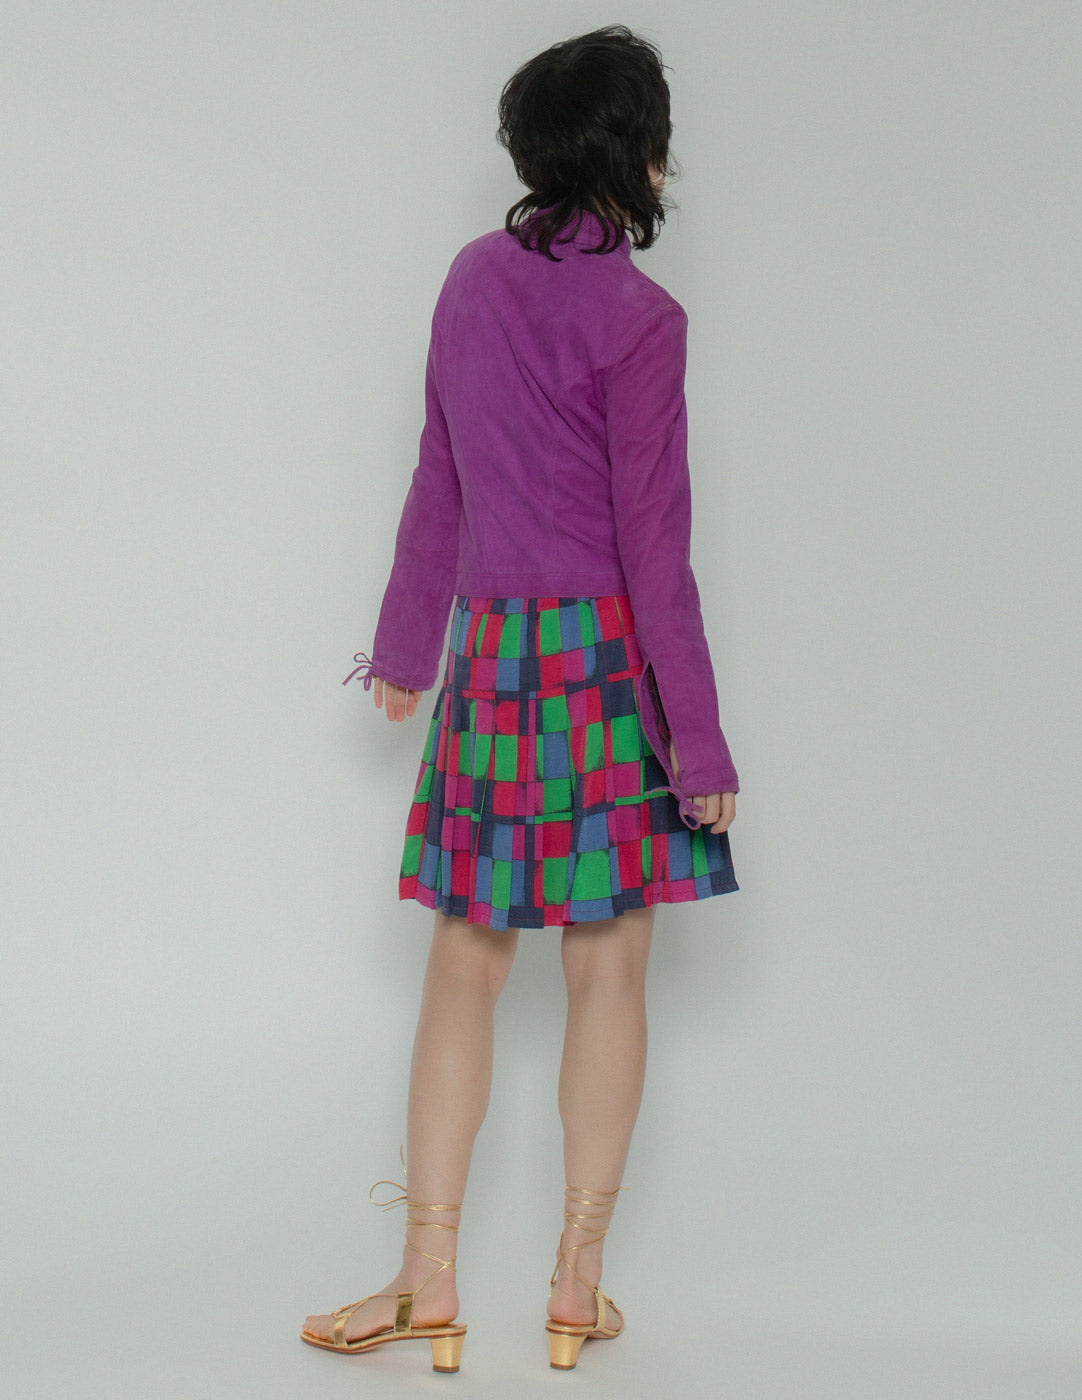 Gianni Versace vintage purple suede jacket back view